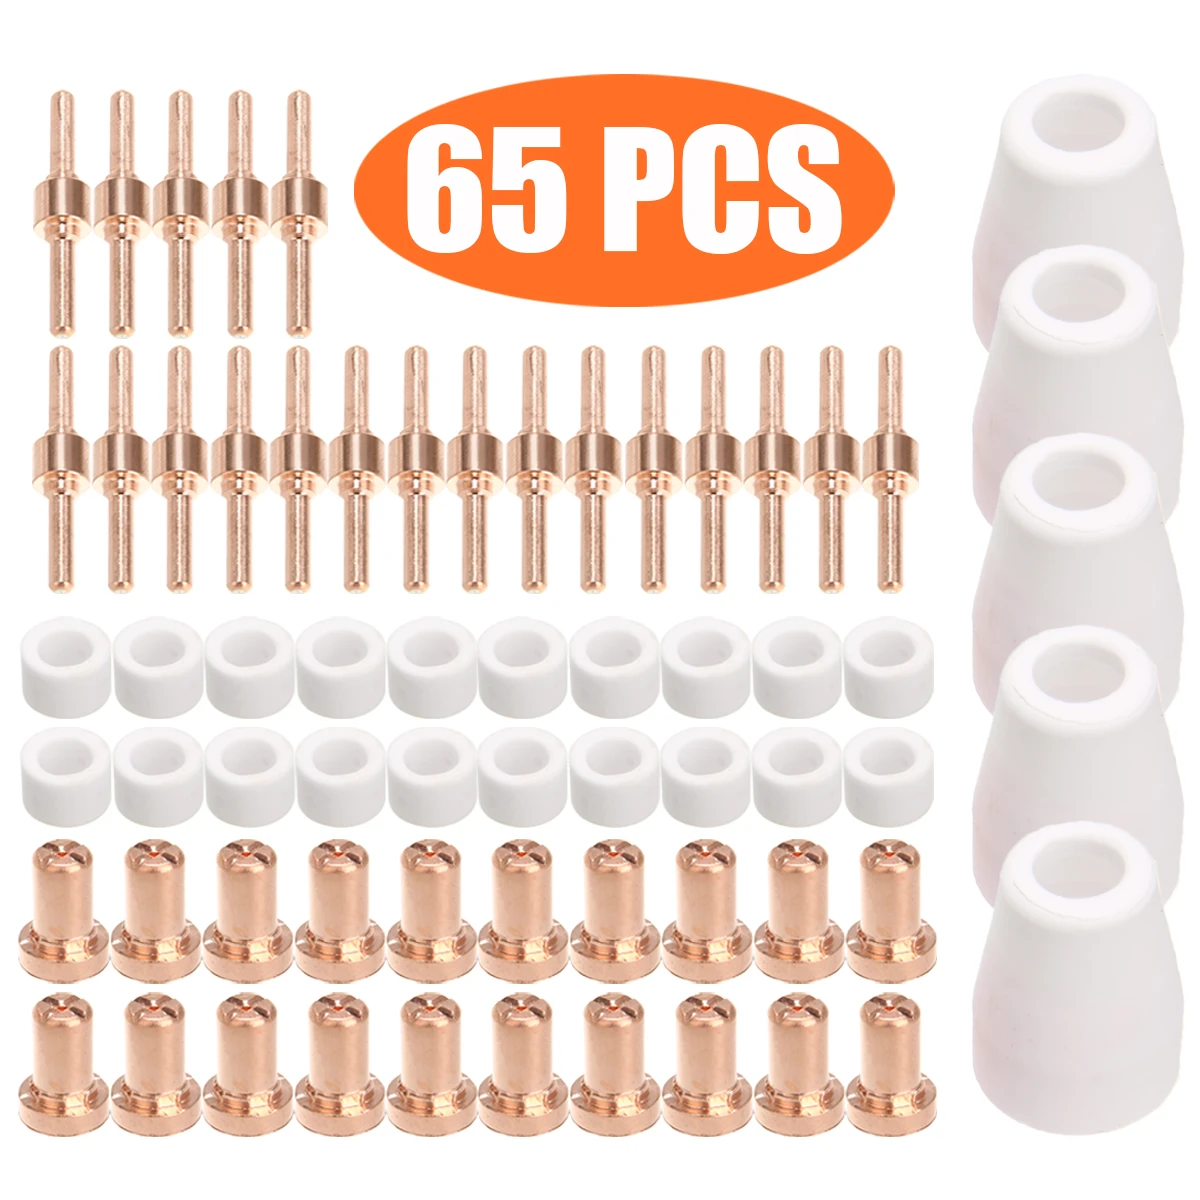 65Pcs Plasma Cutter Tip Electrodes & Nozzles Kit Consumable Accessories For PT31 CUT 30 40 50  Plasma Cutter Welding Tools